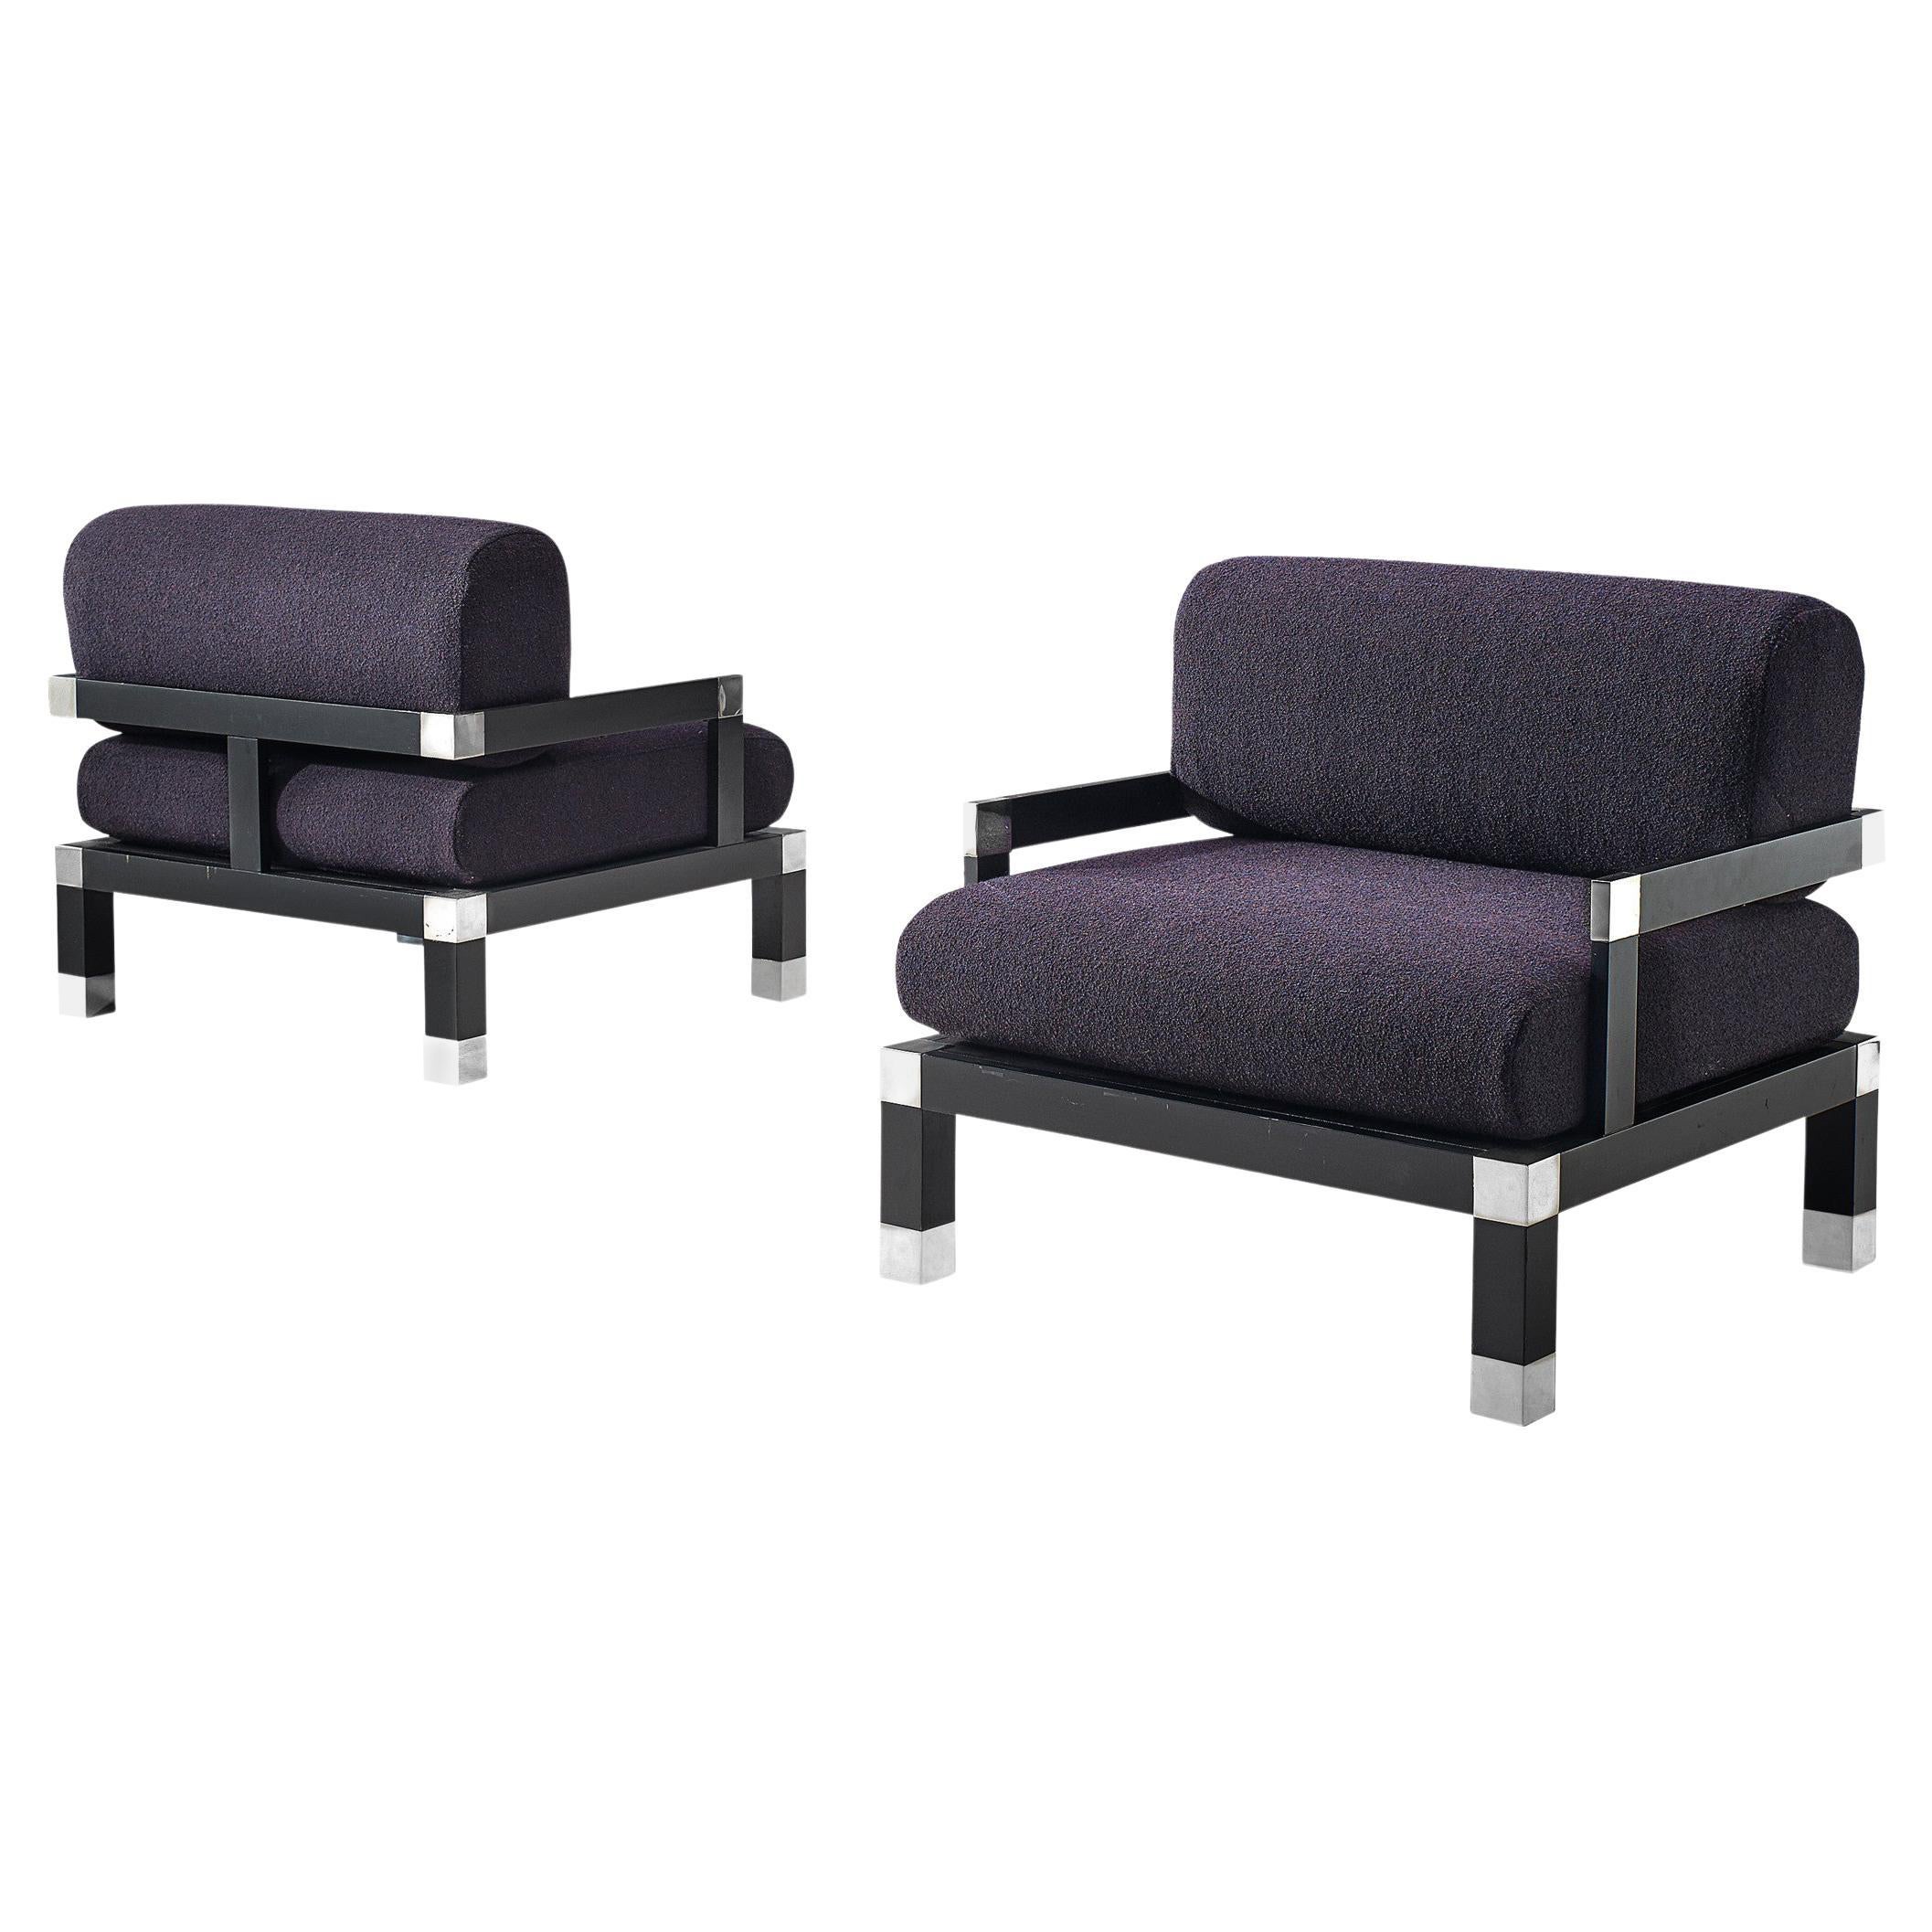 Romeo Rega Pair of Reupholstered Lounge Chairs in Purple Fabric